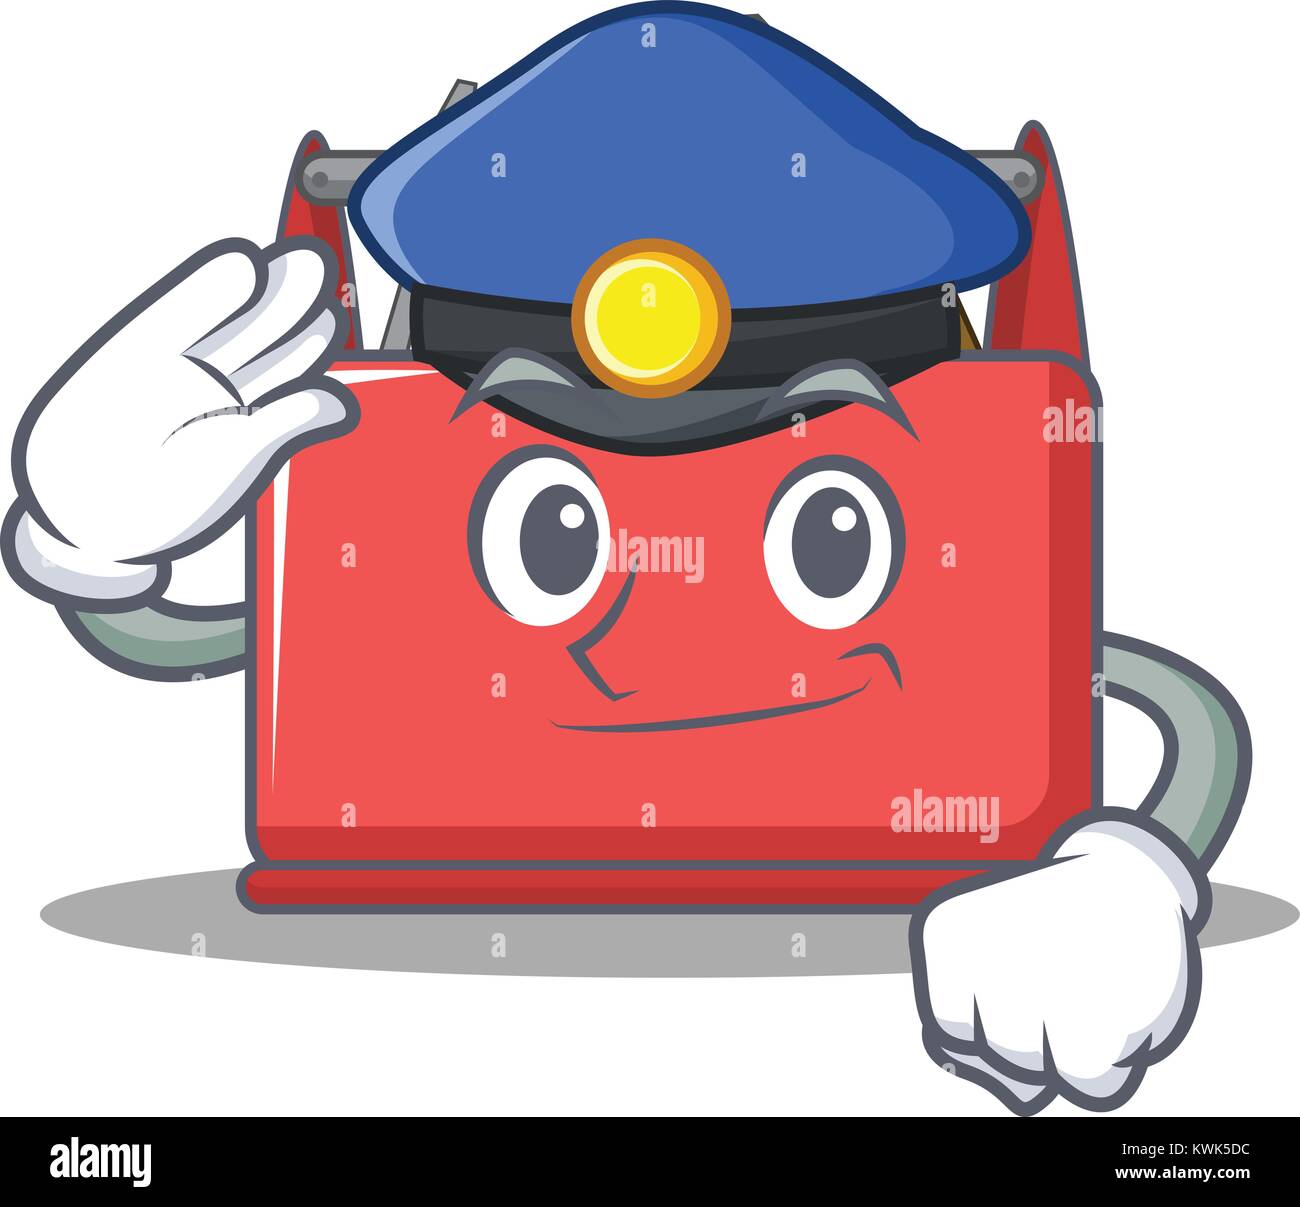 Police tool box character cartoon Stock Vector